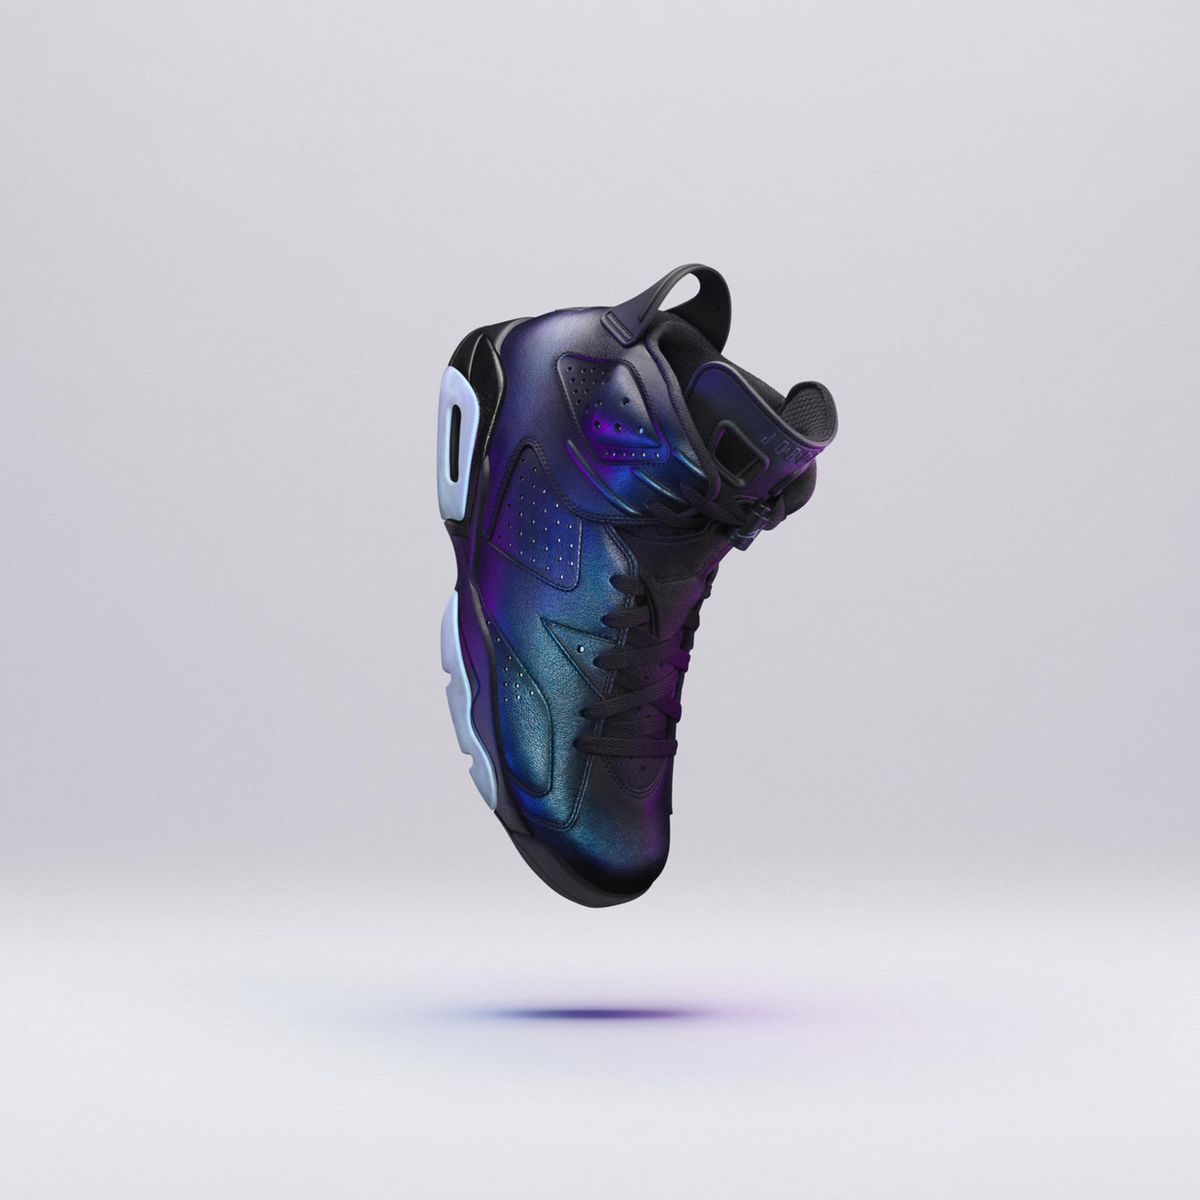 Jordan Brand Releases 3 Clean Retro Sneakers For 2017 NBA All Star Game